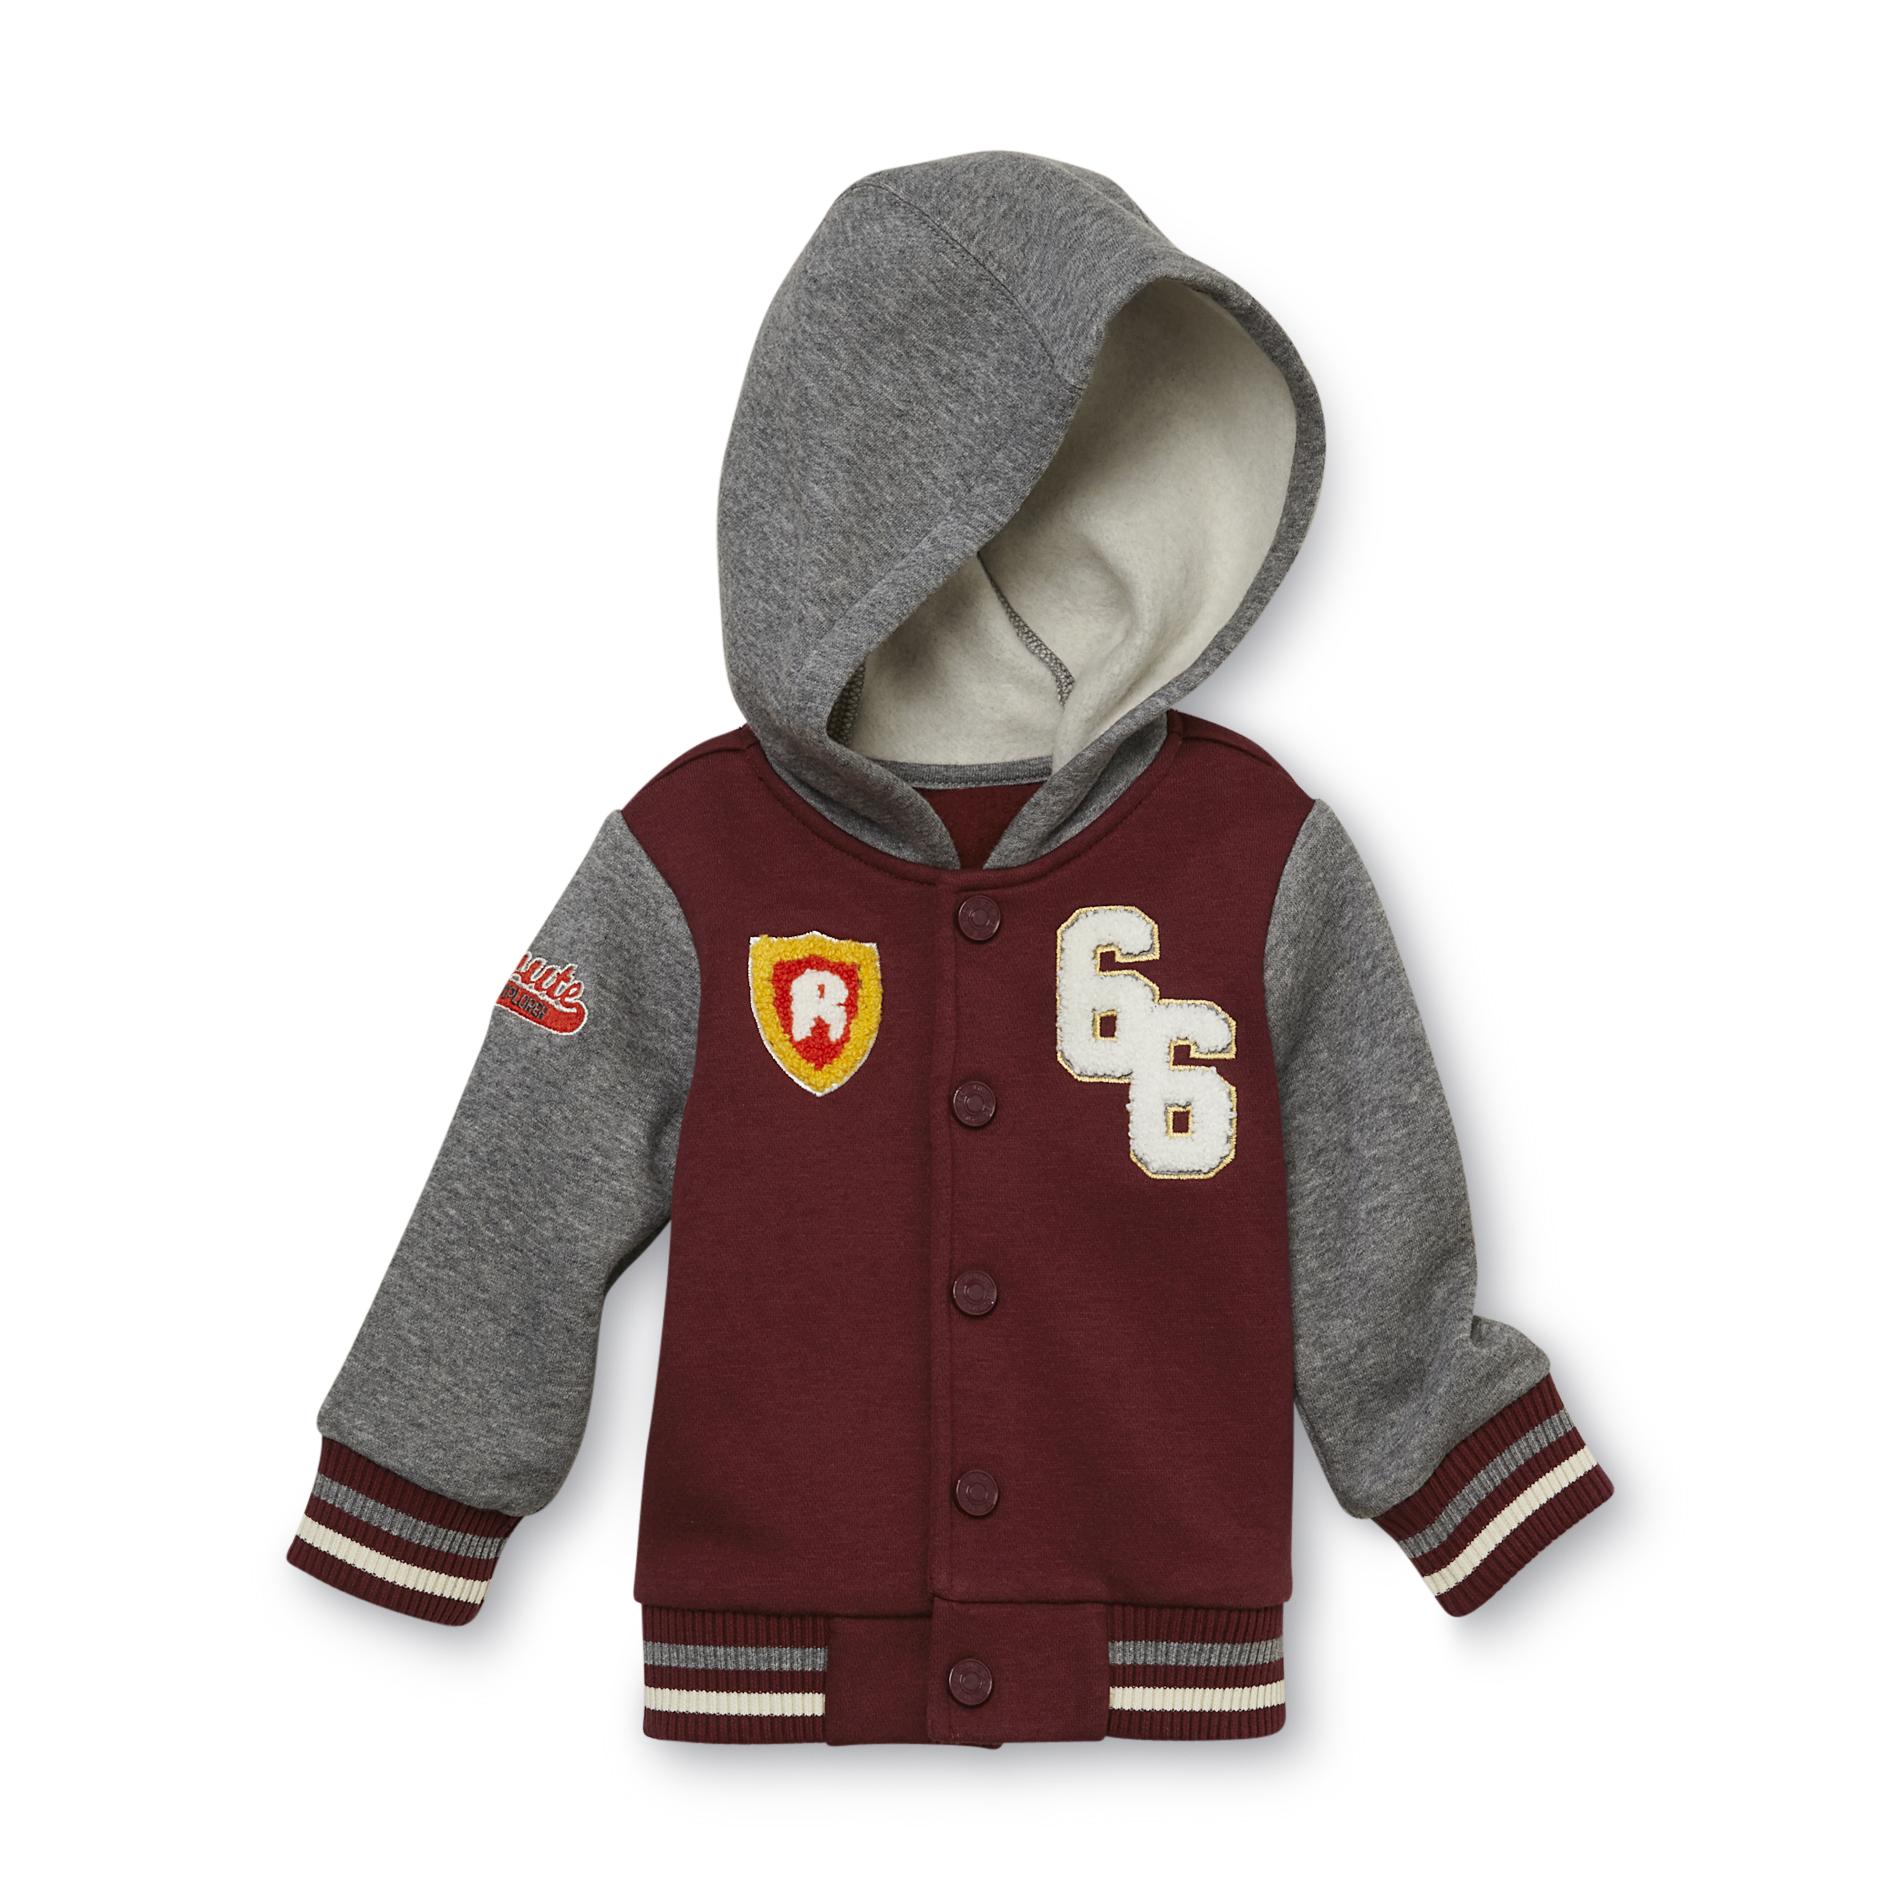 Route 66 Infant Boy's Varsity Jacket